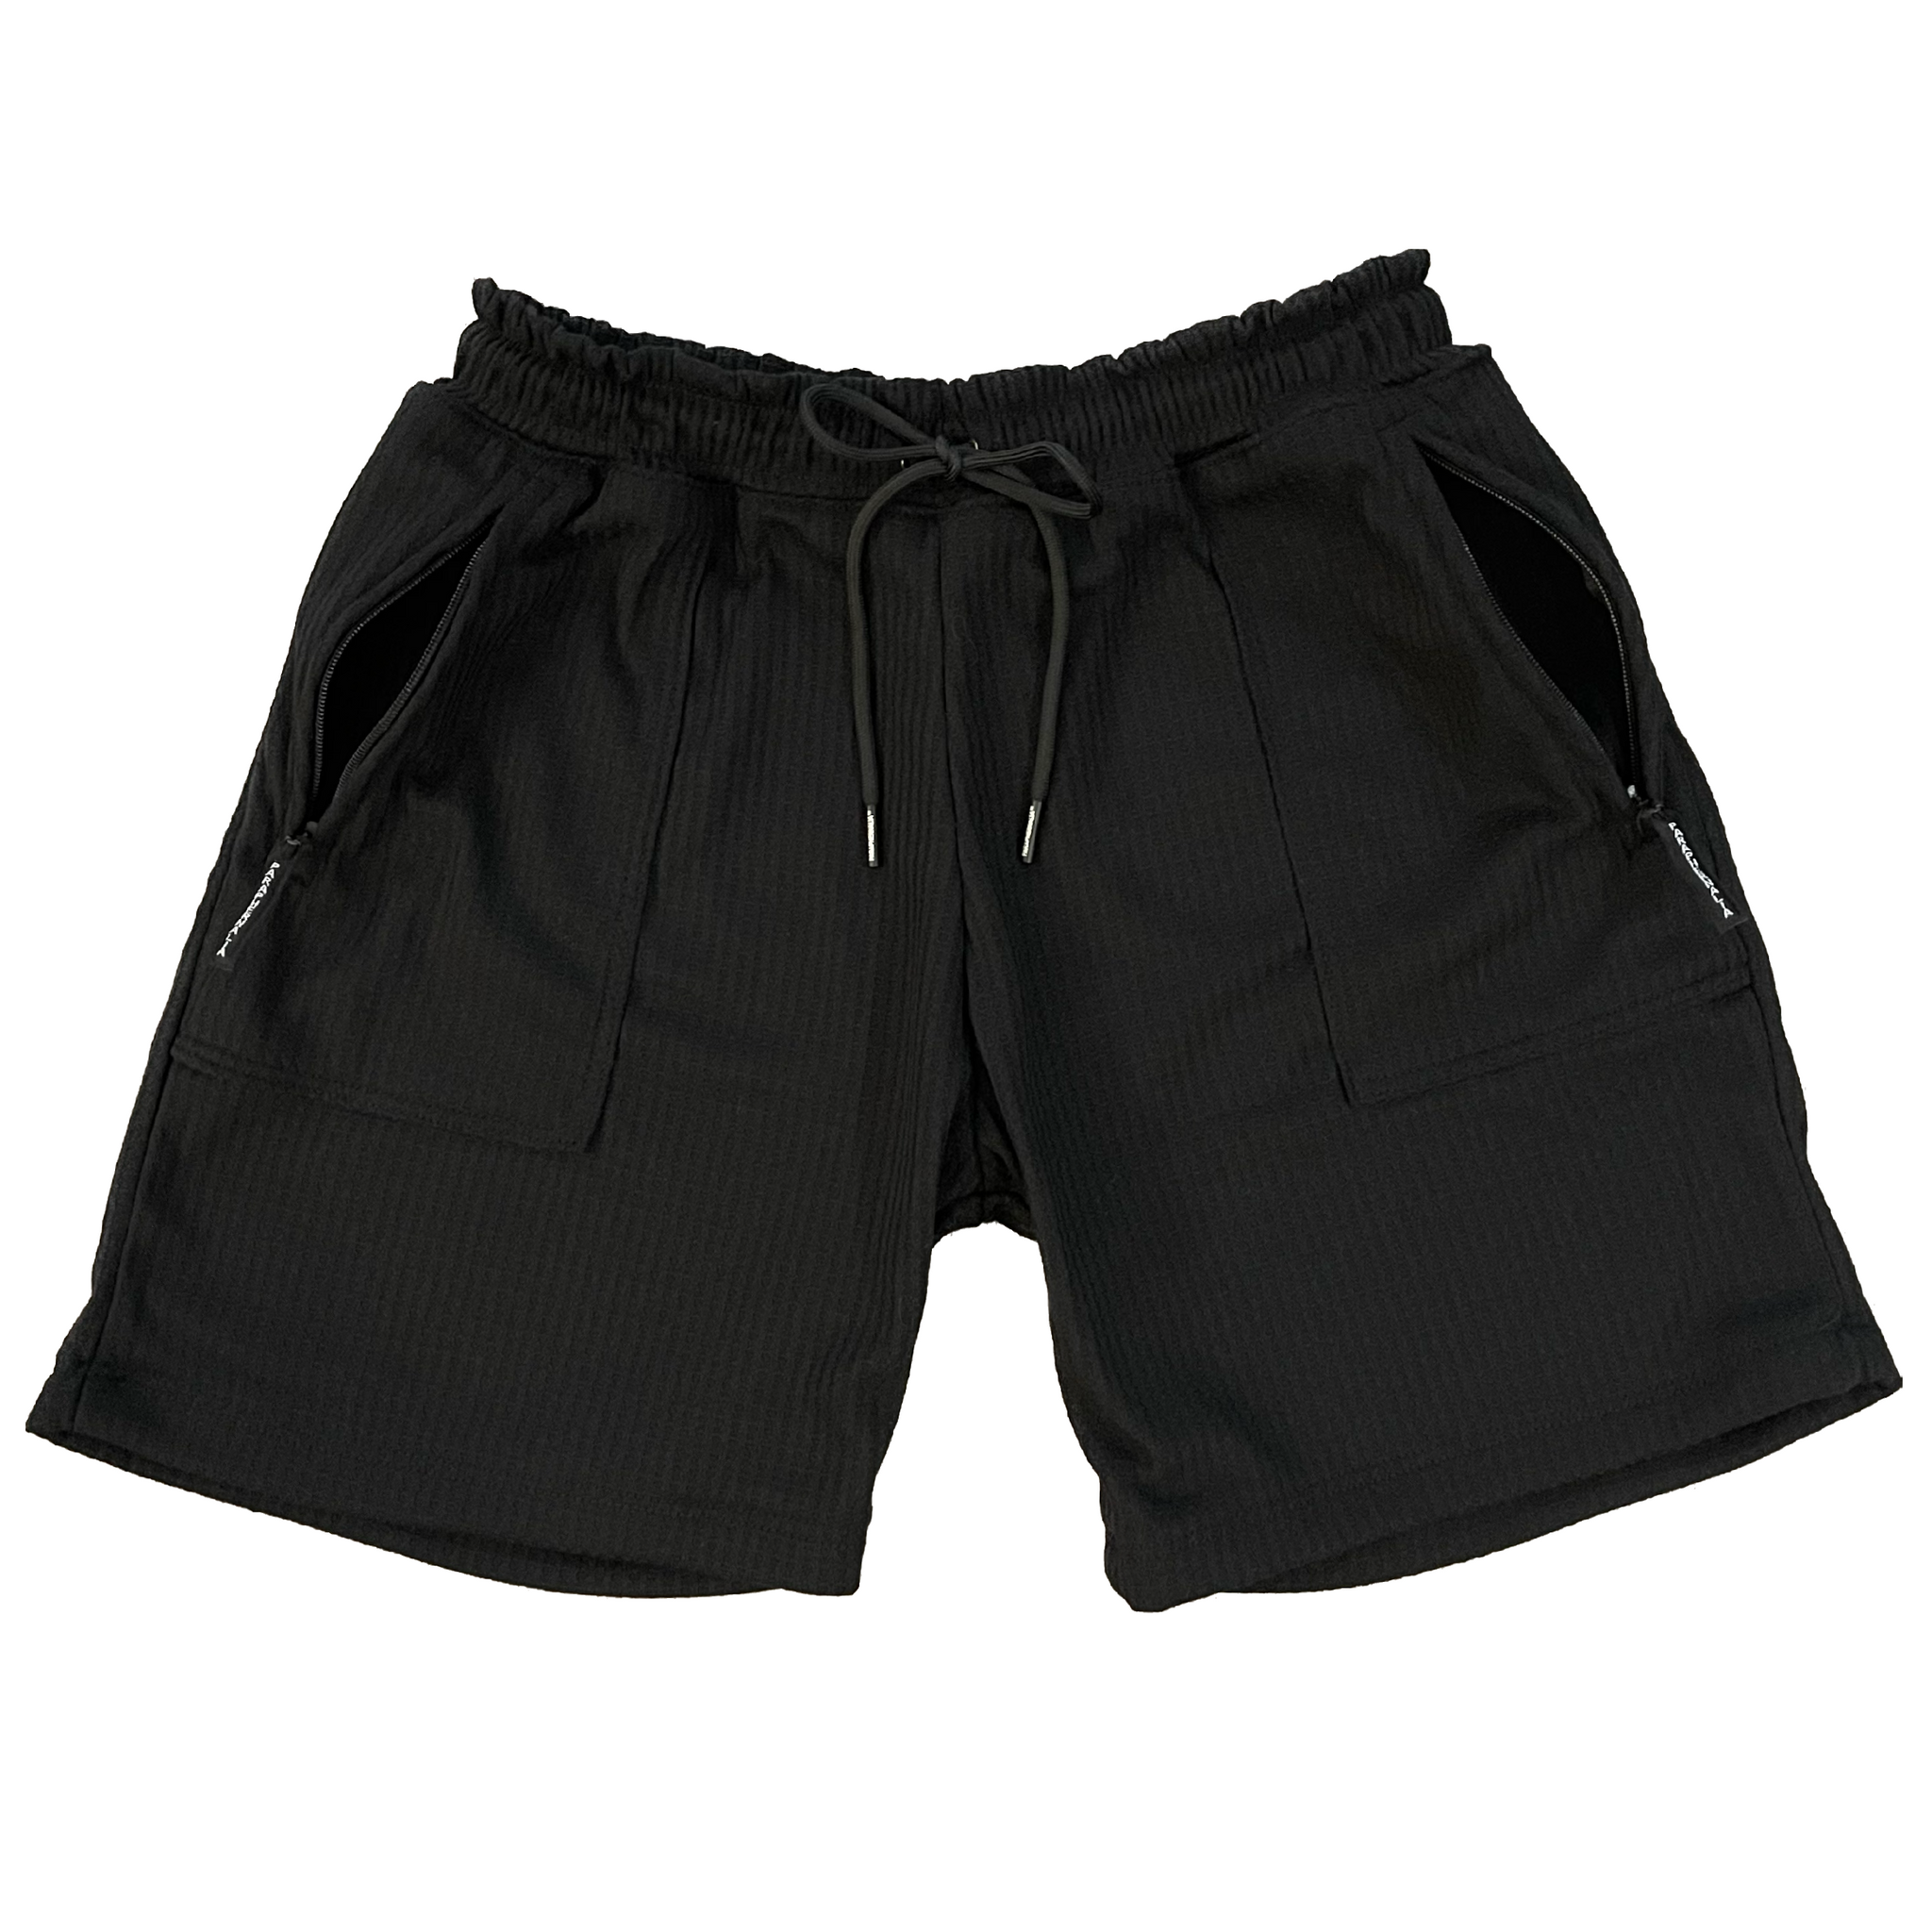 ThermaFit Shorts